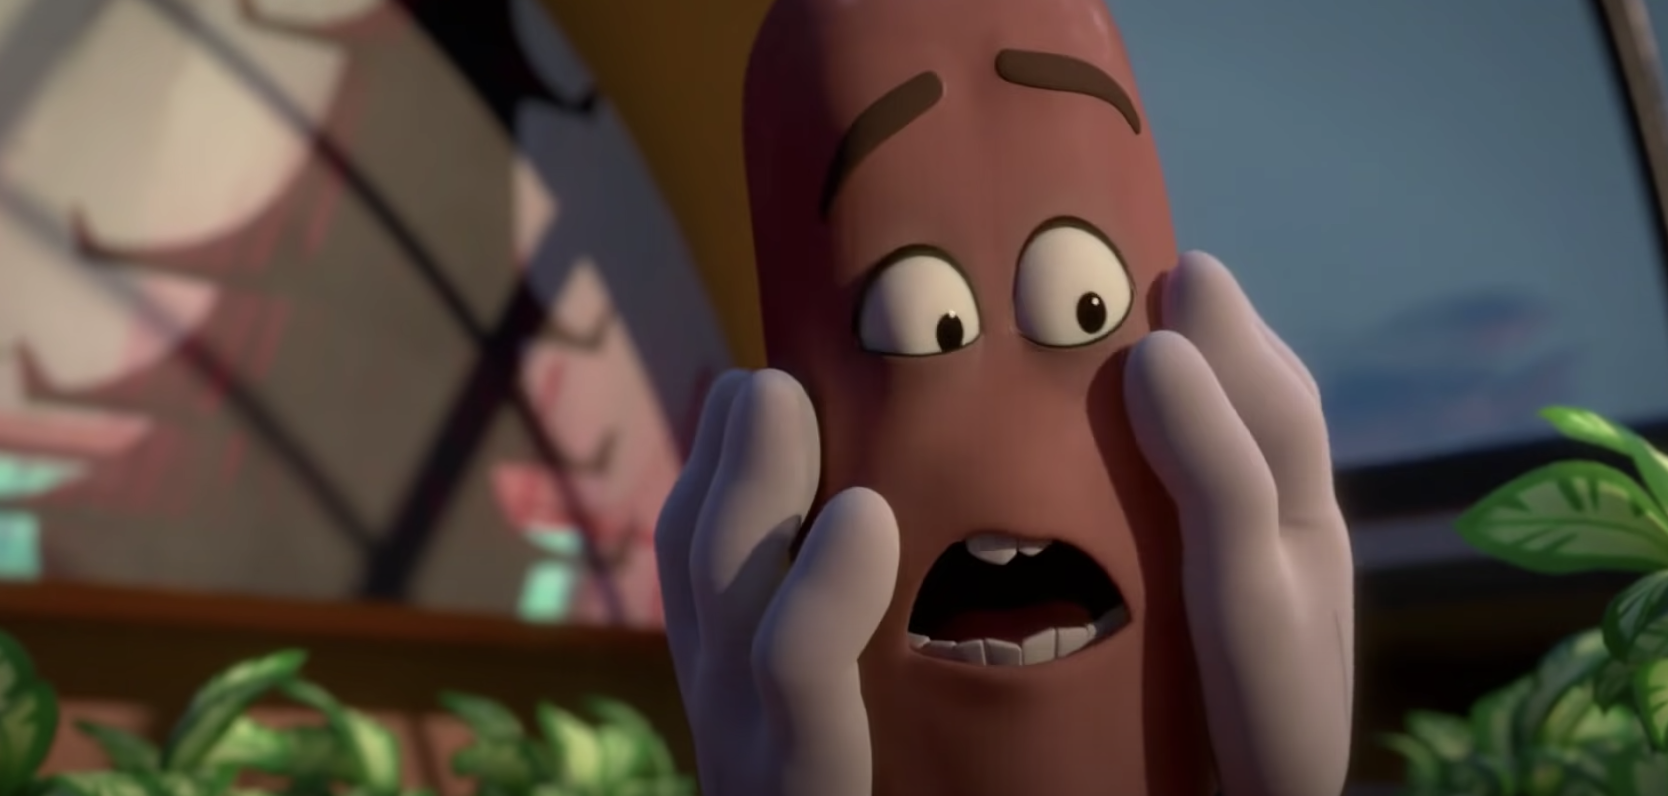 Cartoon hotdog looks shocked